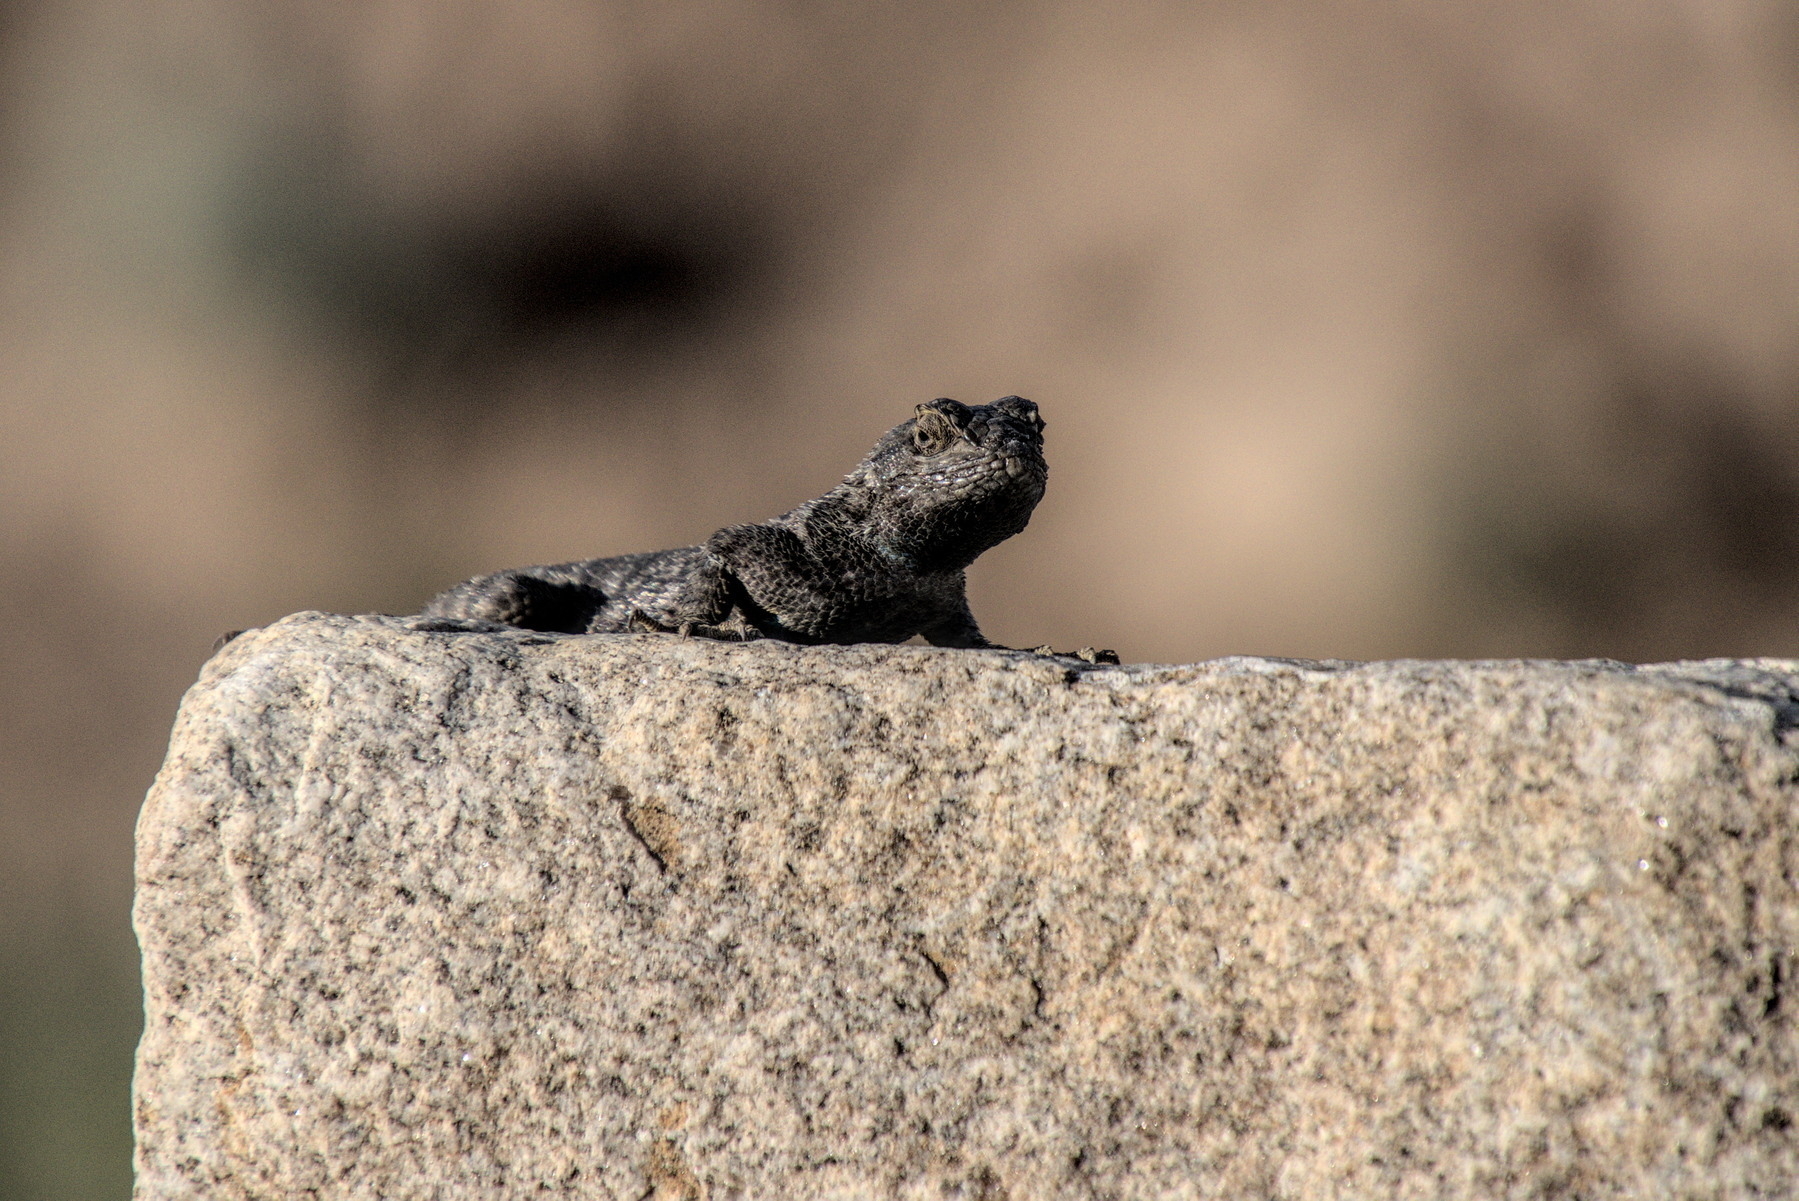 Lizard sunning on  a piece of granite.